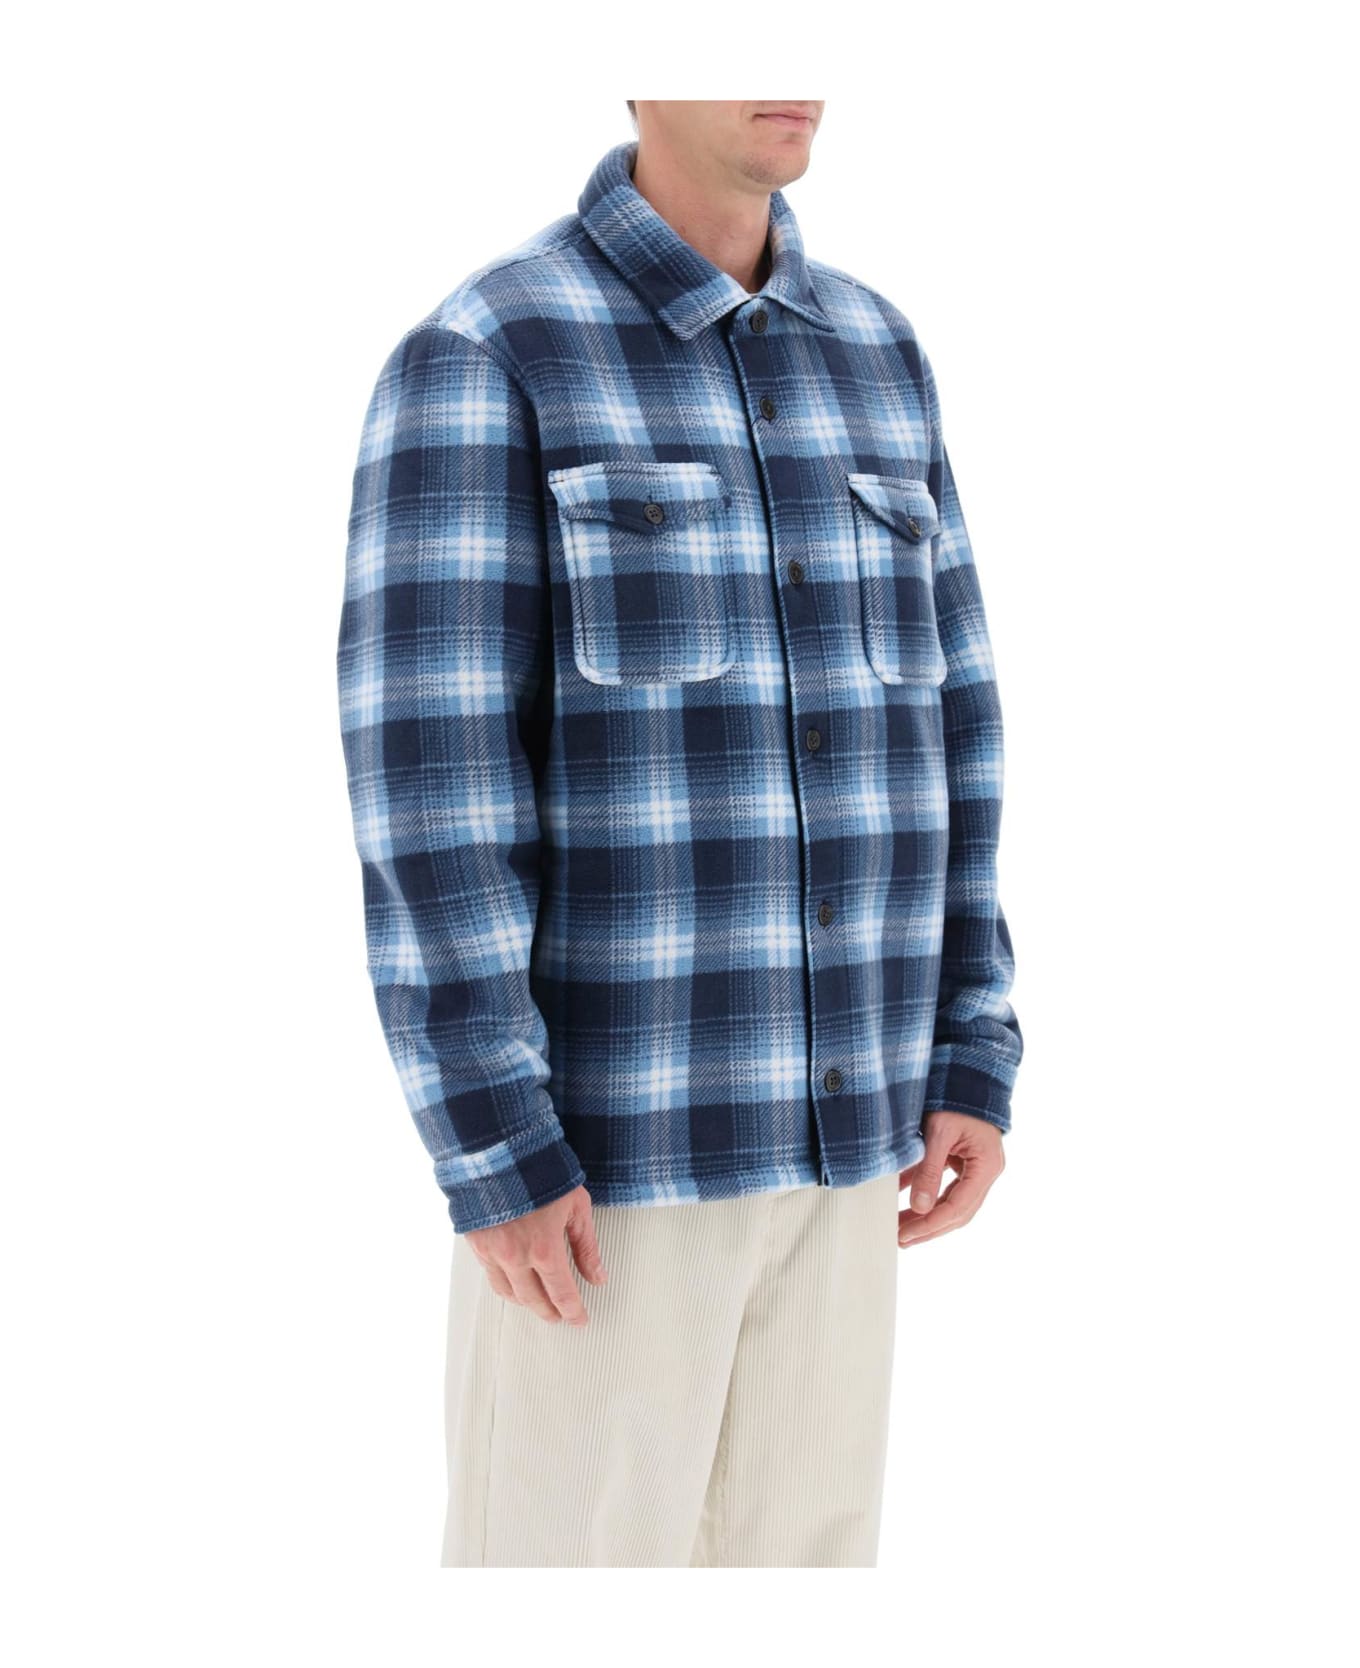 Polo Ralph Lauren Check Shirt Jacket - OUTDOOR OMBRE PLAID (Blue)